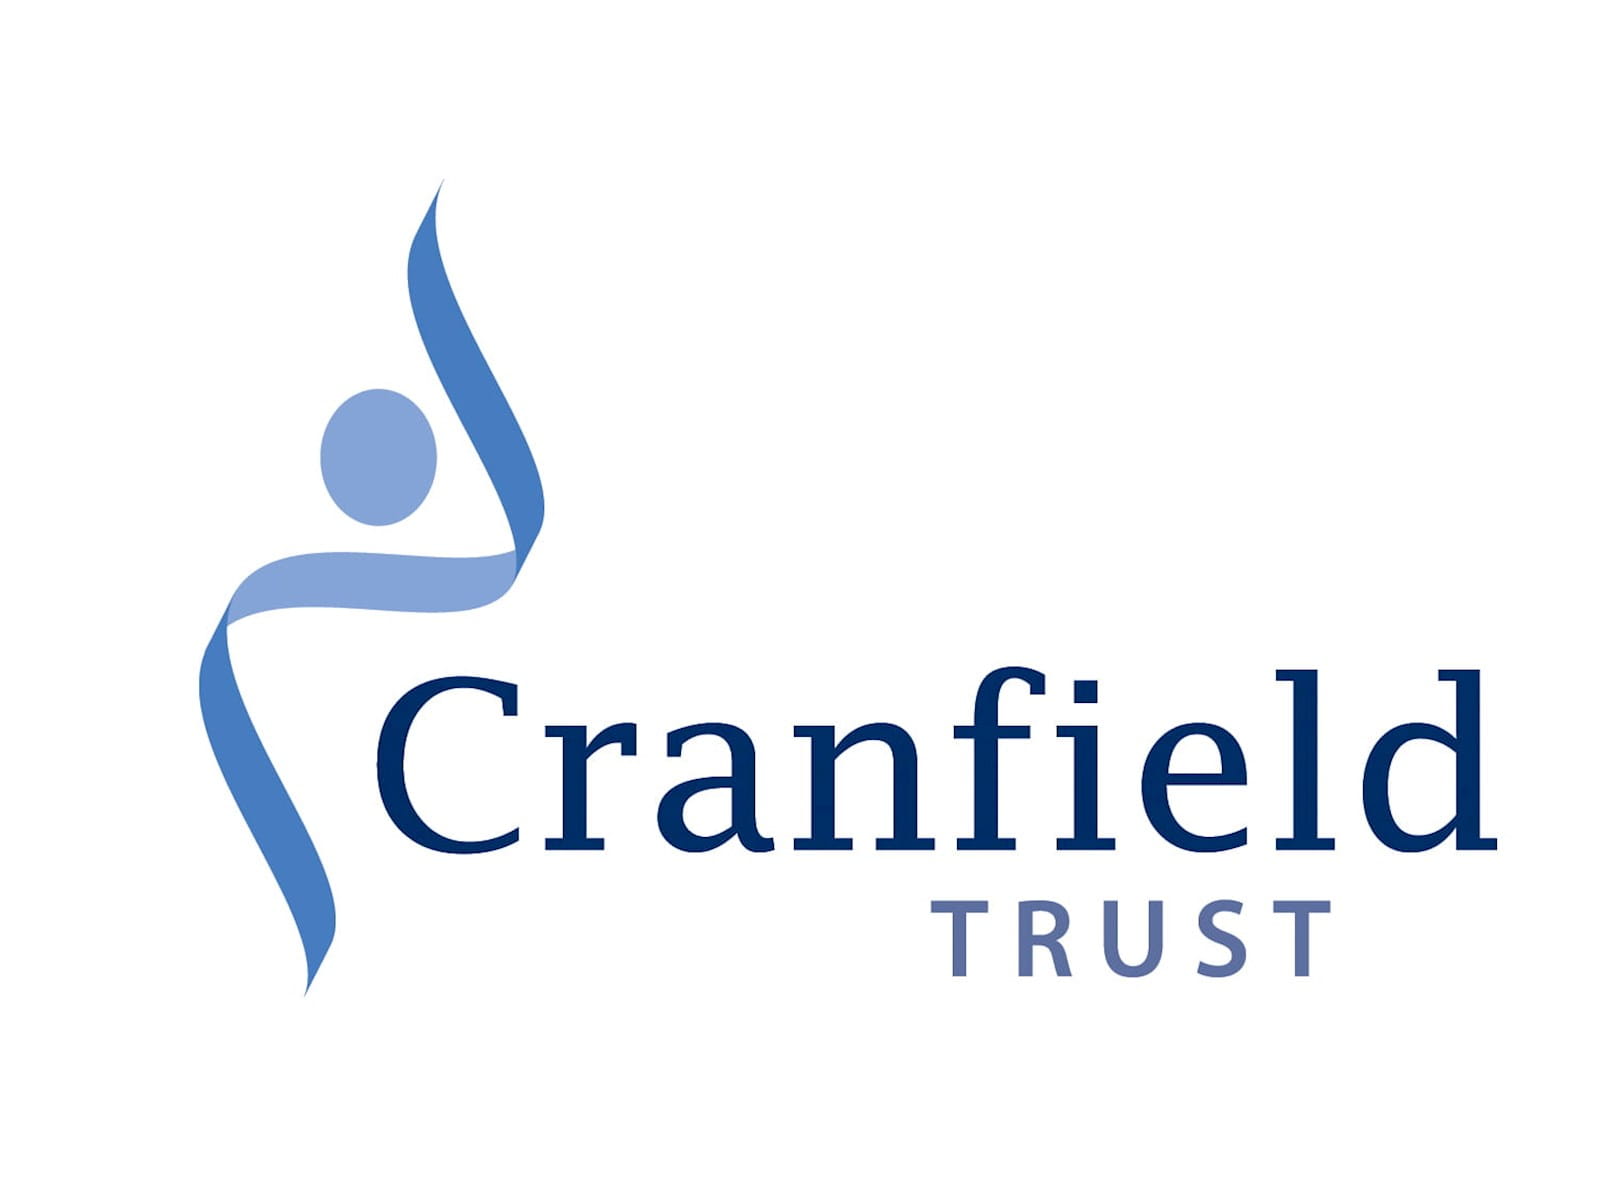 Cranfield Trust logo